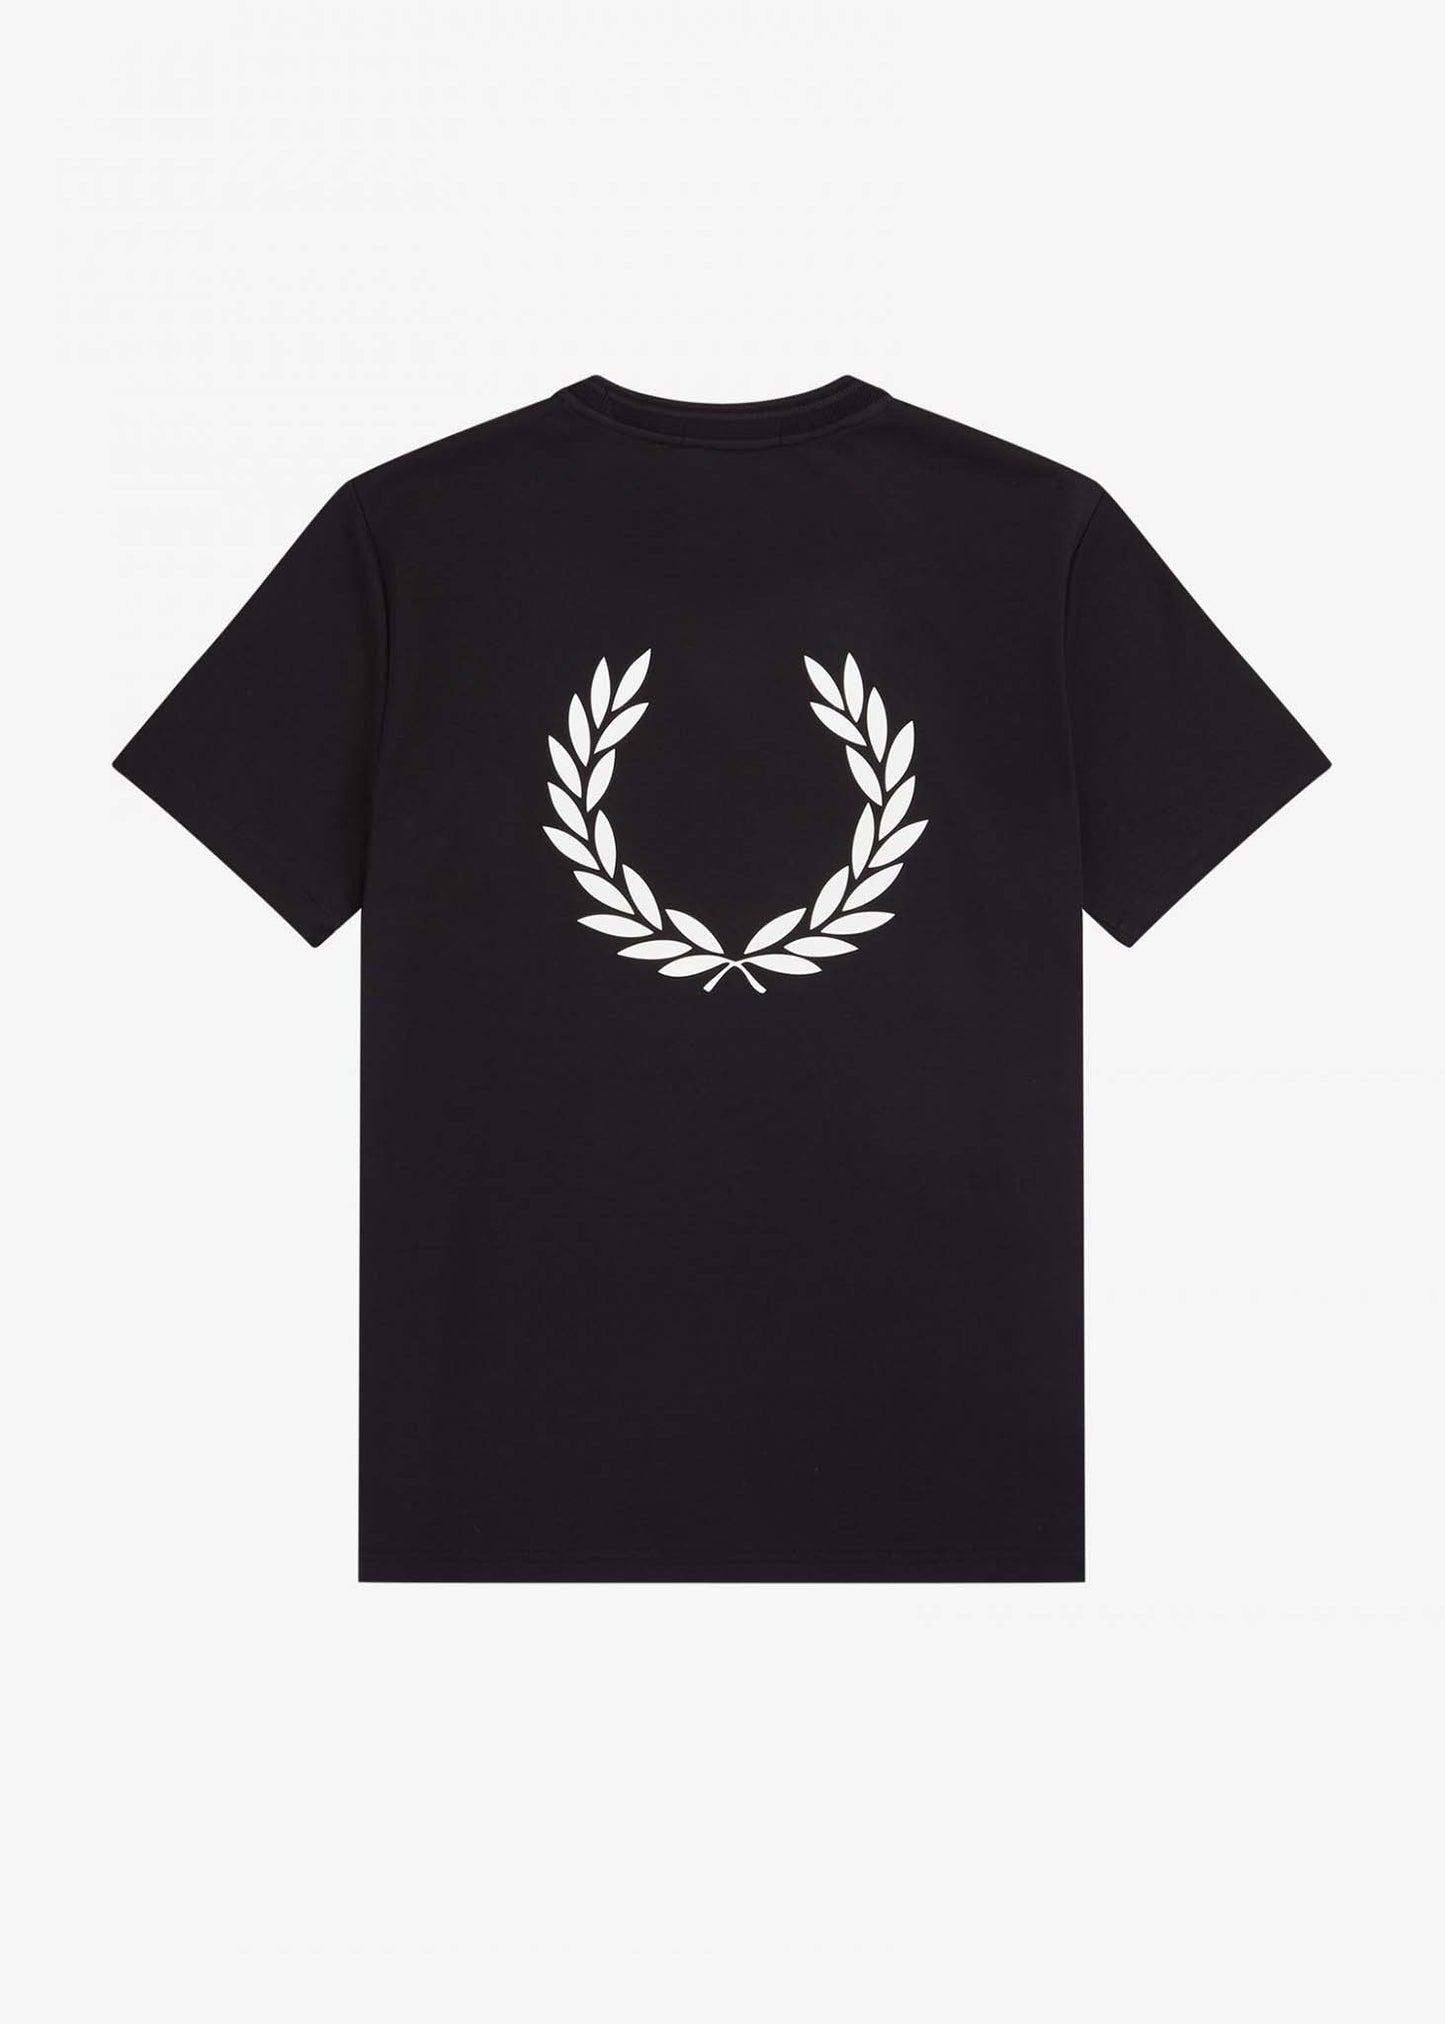 fred perry t-shirt back print logo black